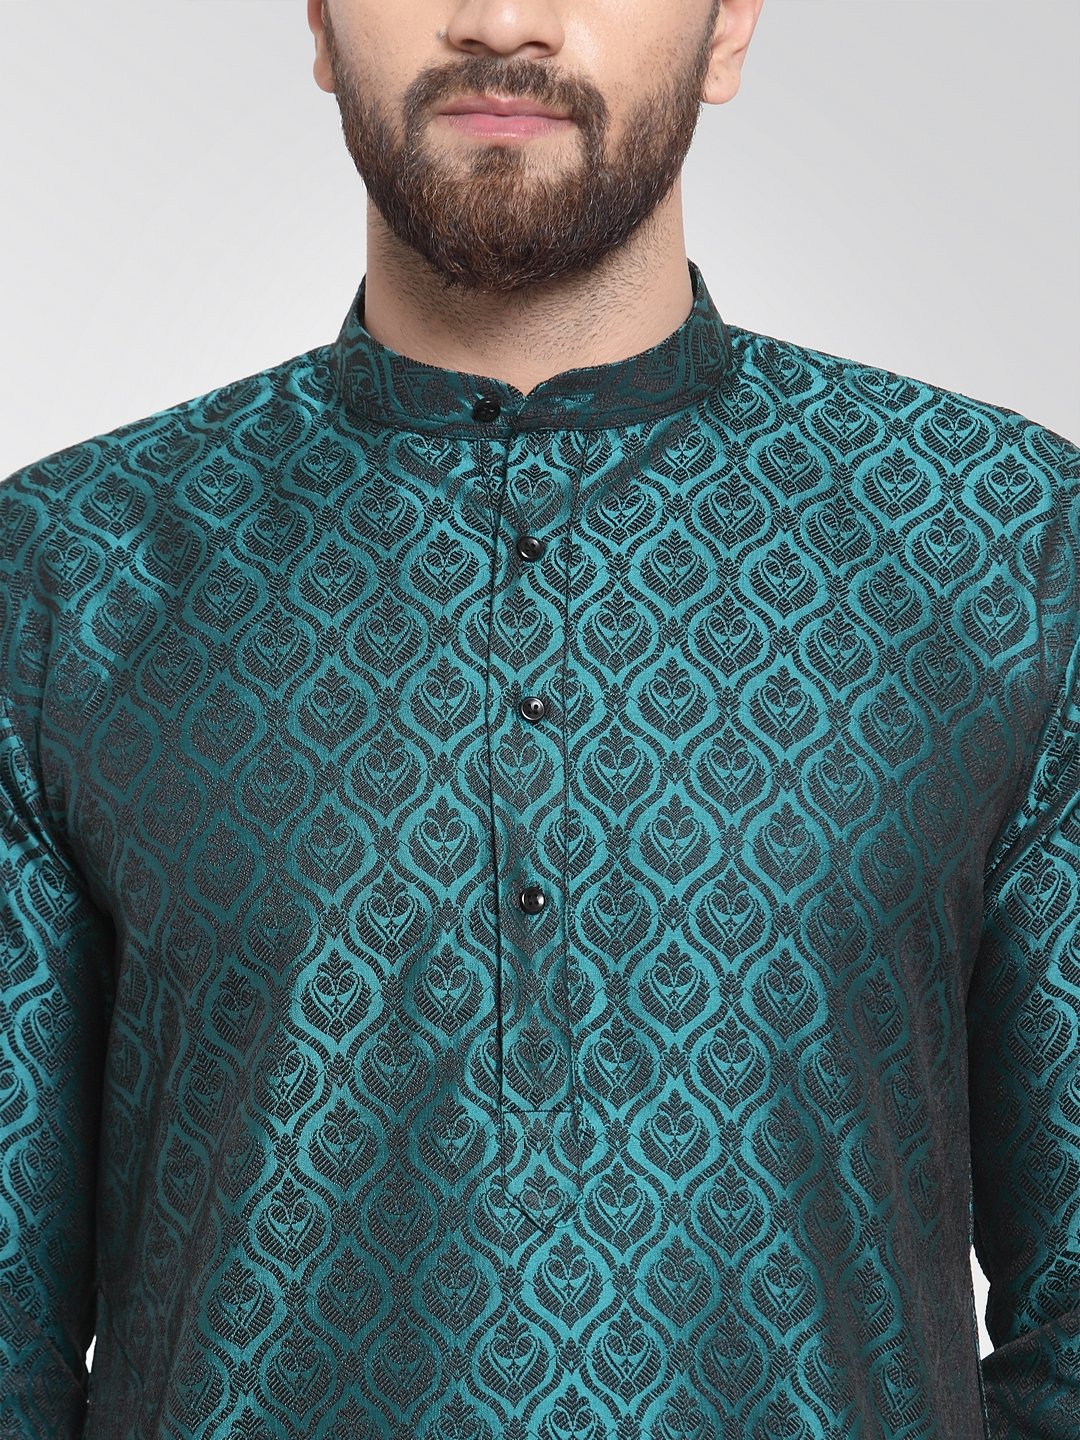 Men's Green-Colored & Black Self Design Kurta with Churidar ( JOKP 584 Green ) - Virat Fashions